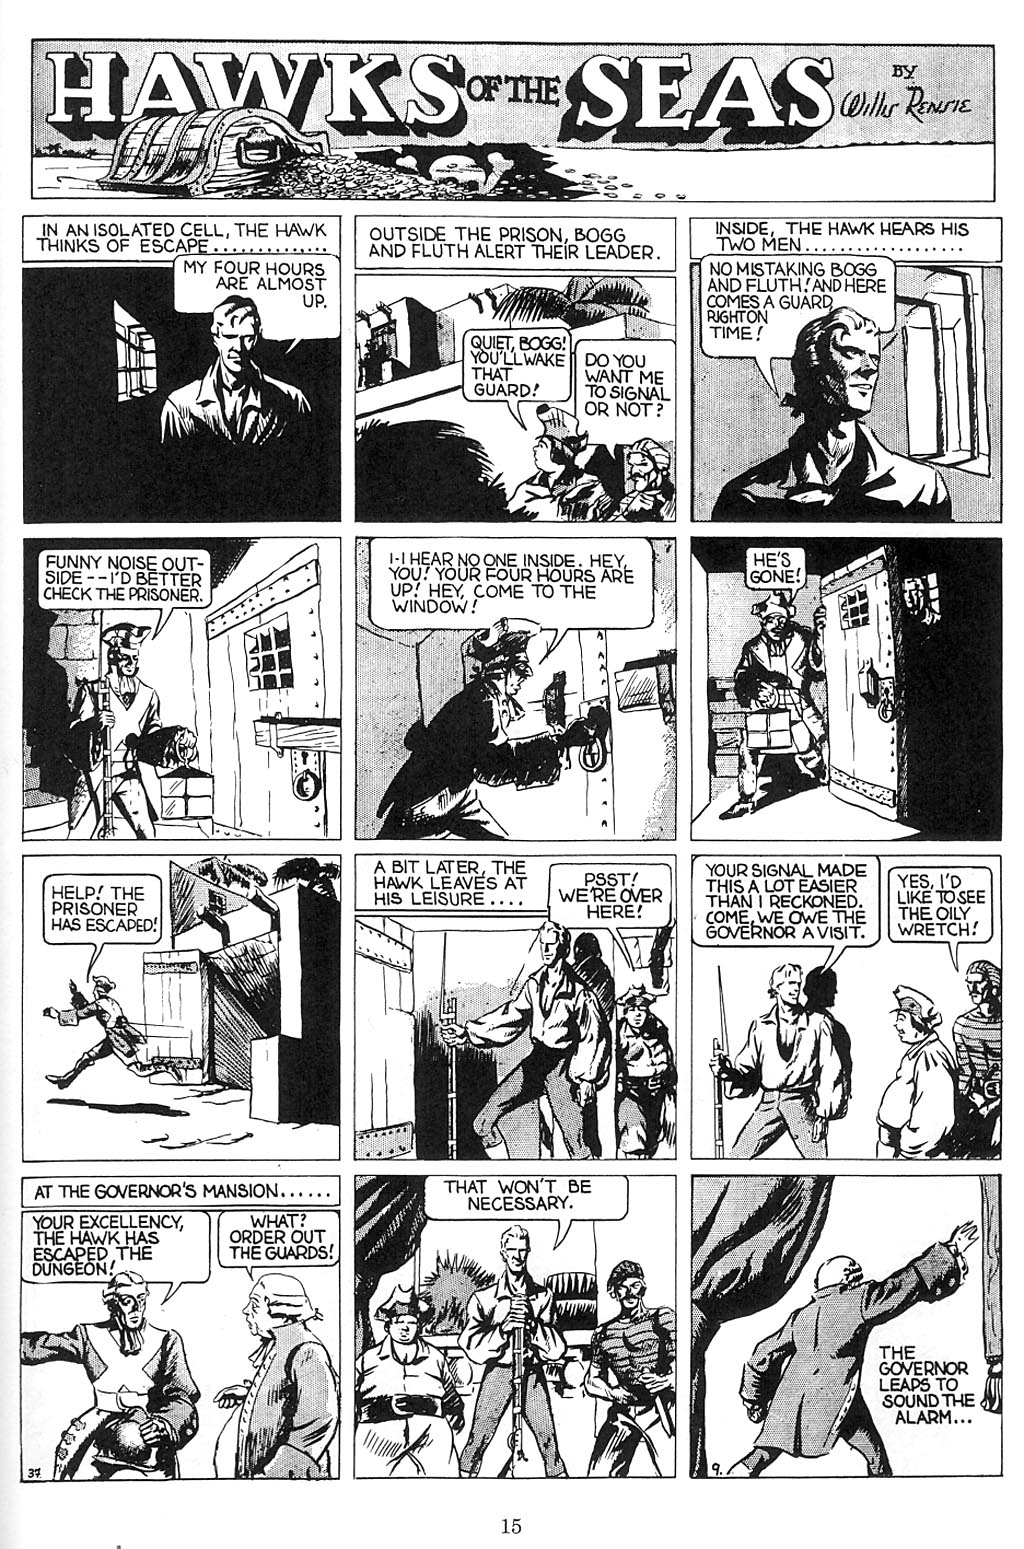 Read online Will Eisner's Hawks of the Seas comic -  Issue # TPB - 16